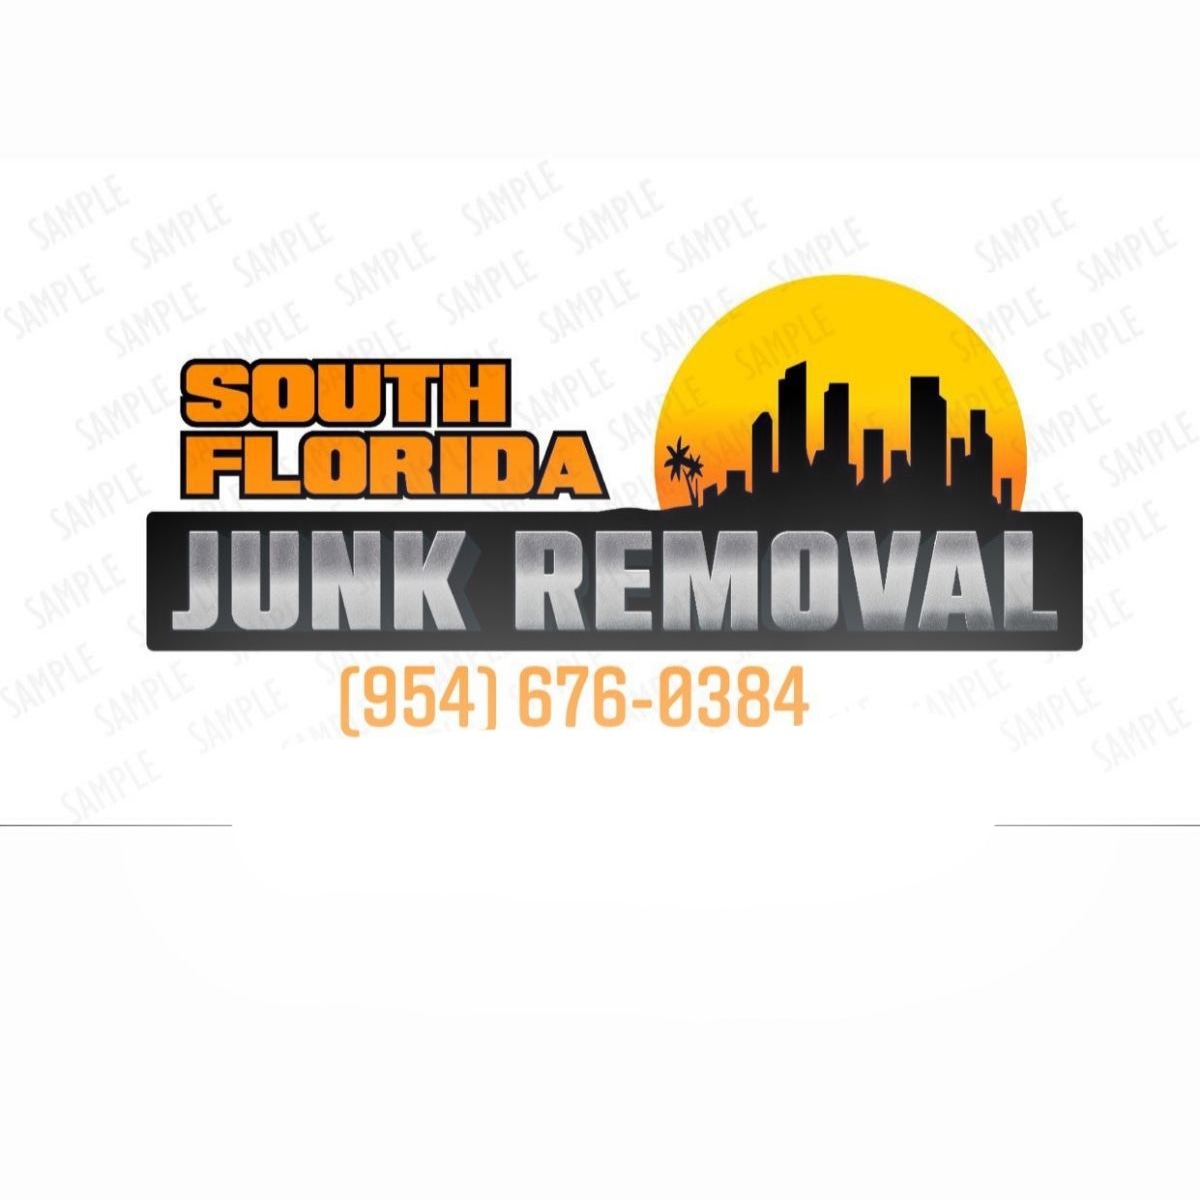 South Florida Junk Removal, LLC Logo